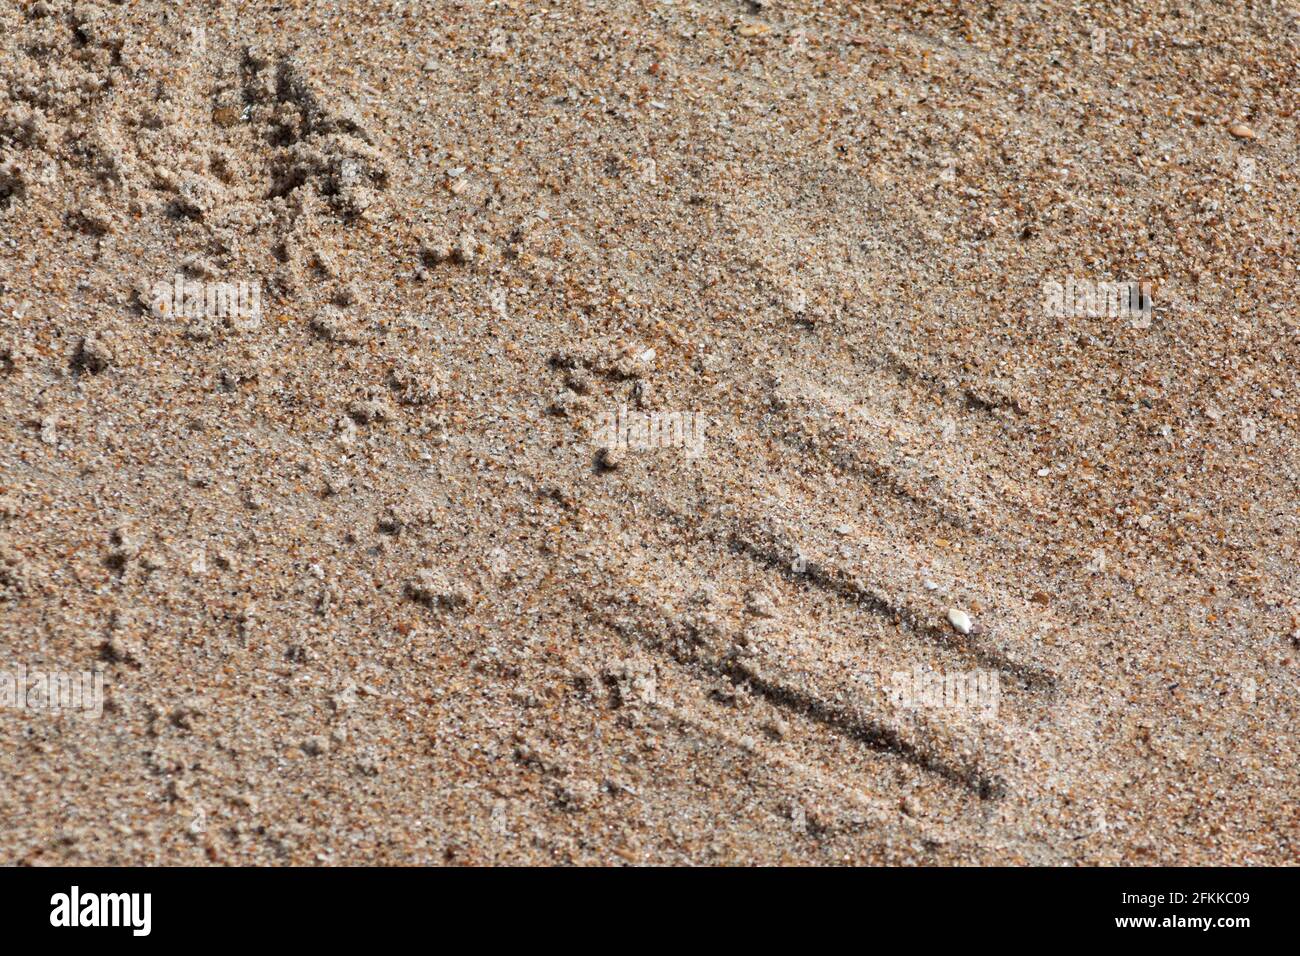 close up of a shoe imprint on a sandy beach Stock Photo